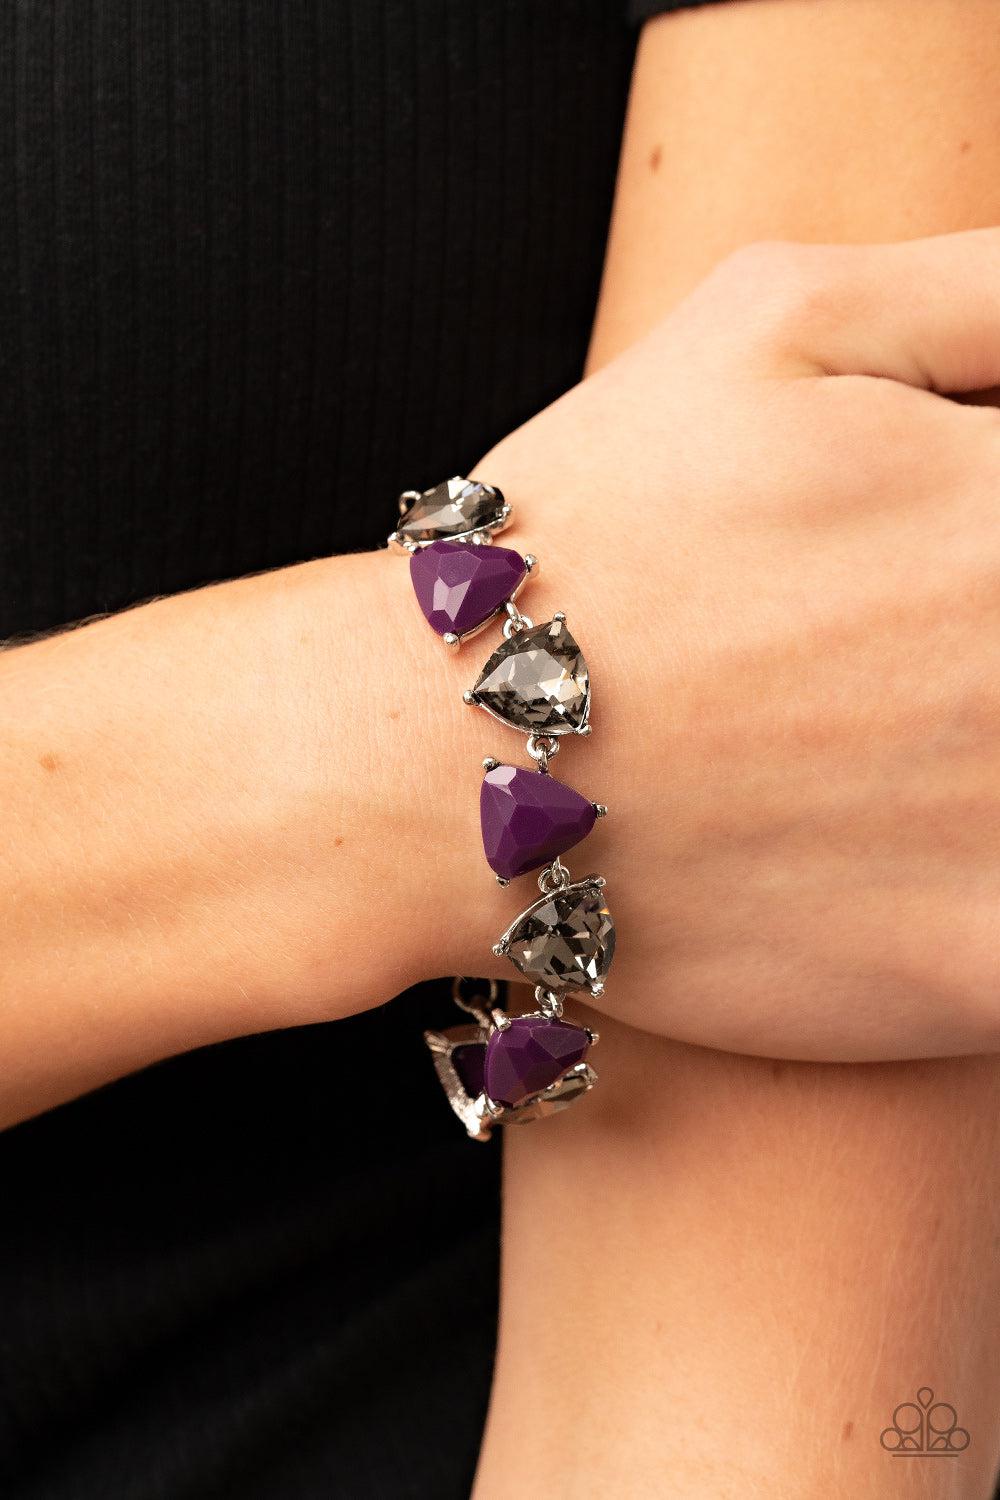 Pumped up Prisms Purple Rhinestone Bracelet - Paparazzi Accessories-on model - CarasShop.com - $5 Jewelry by Cara Jewels